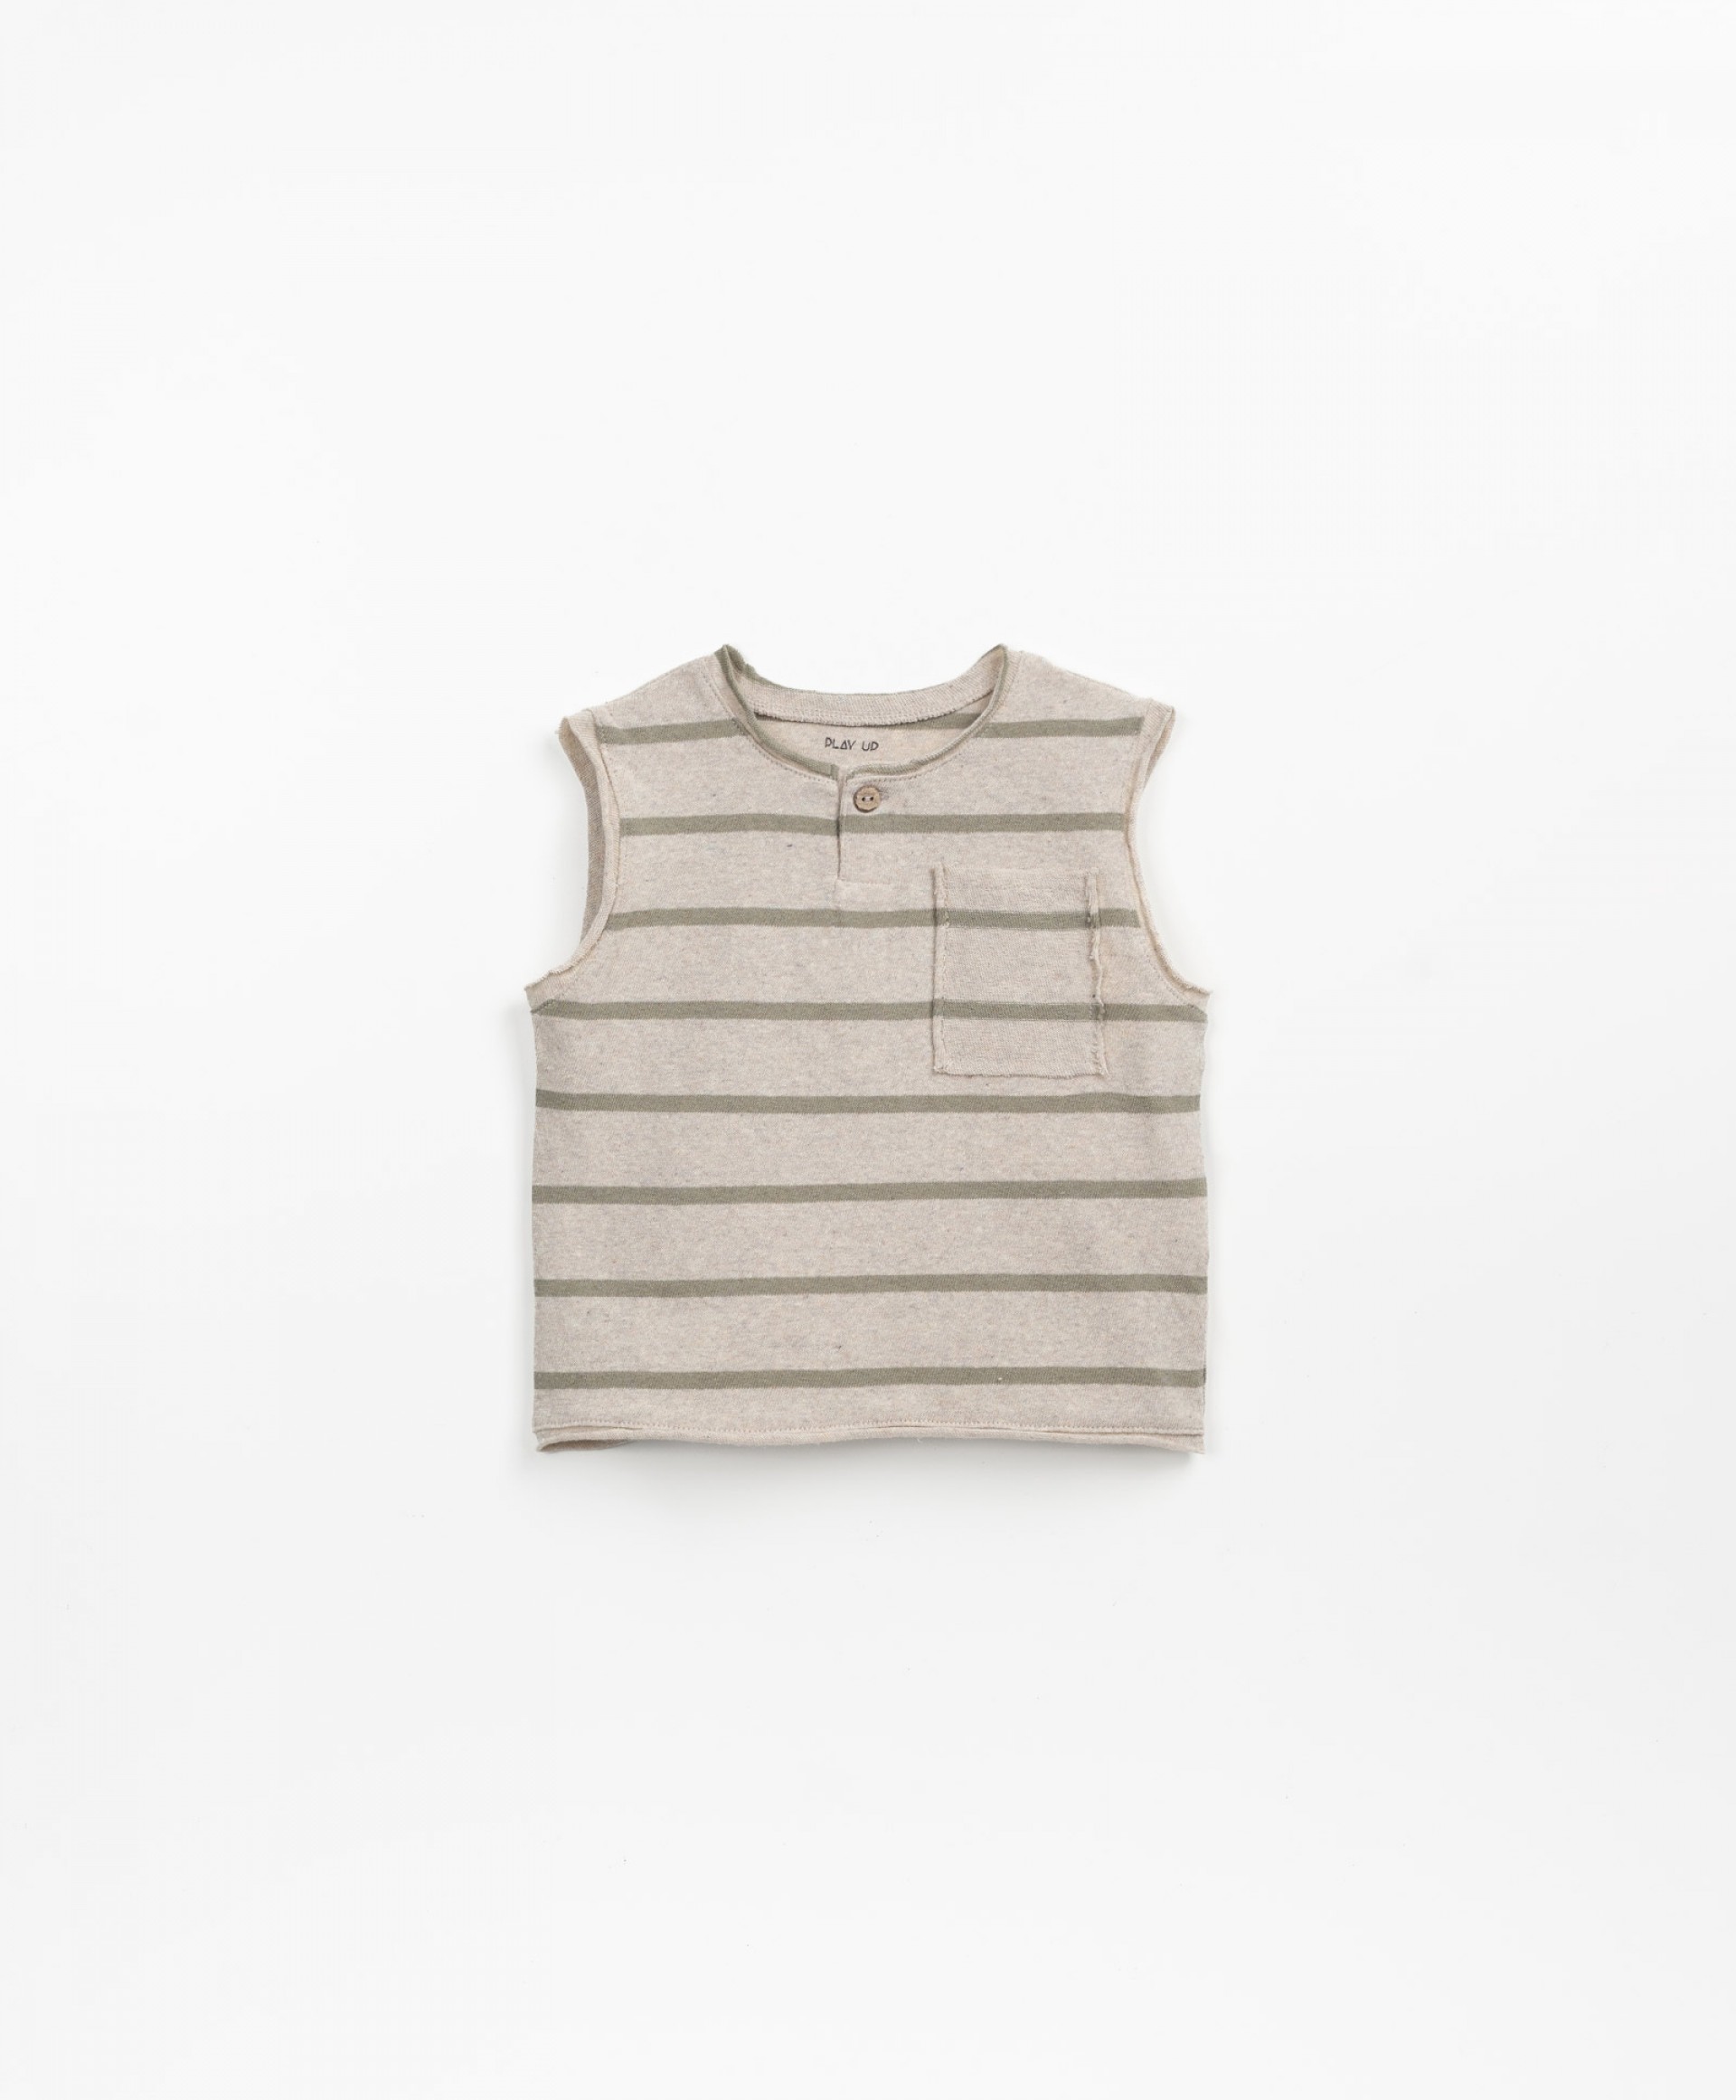 Camiseta sin mangas con fibras recicladas | Textile Art